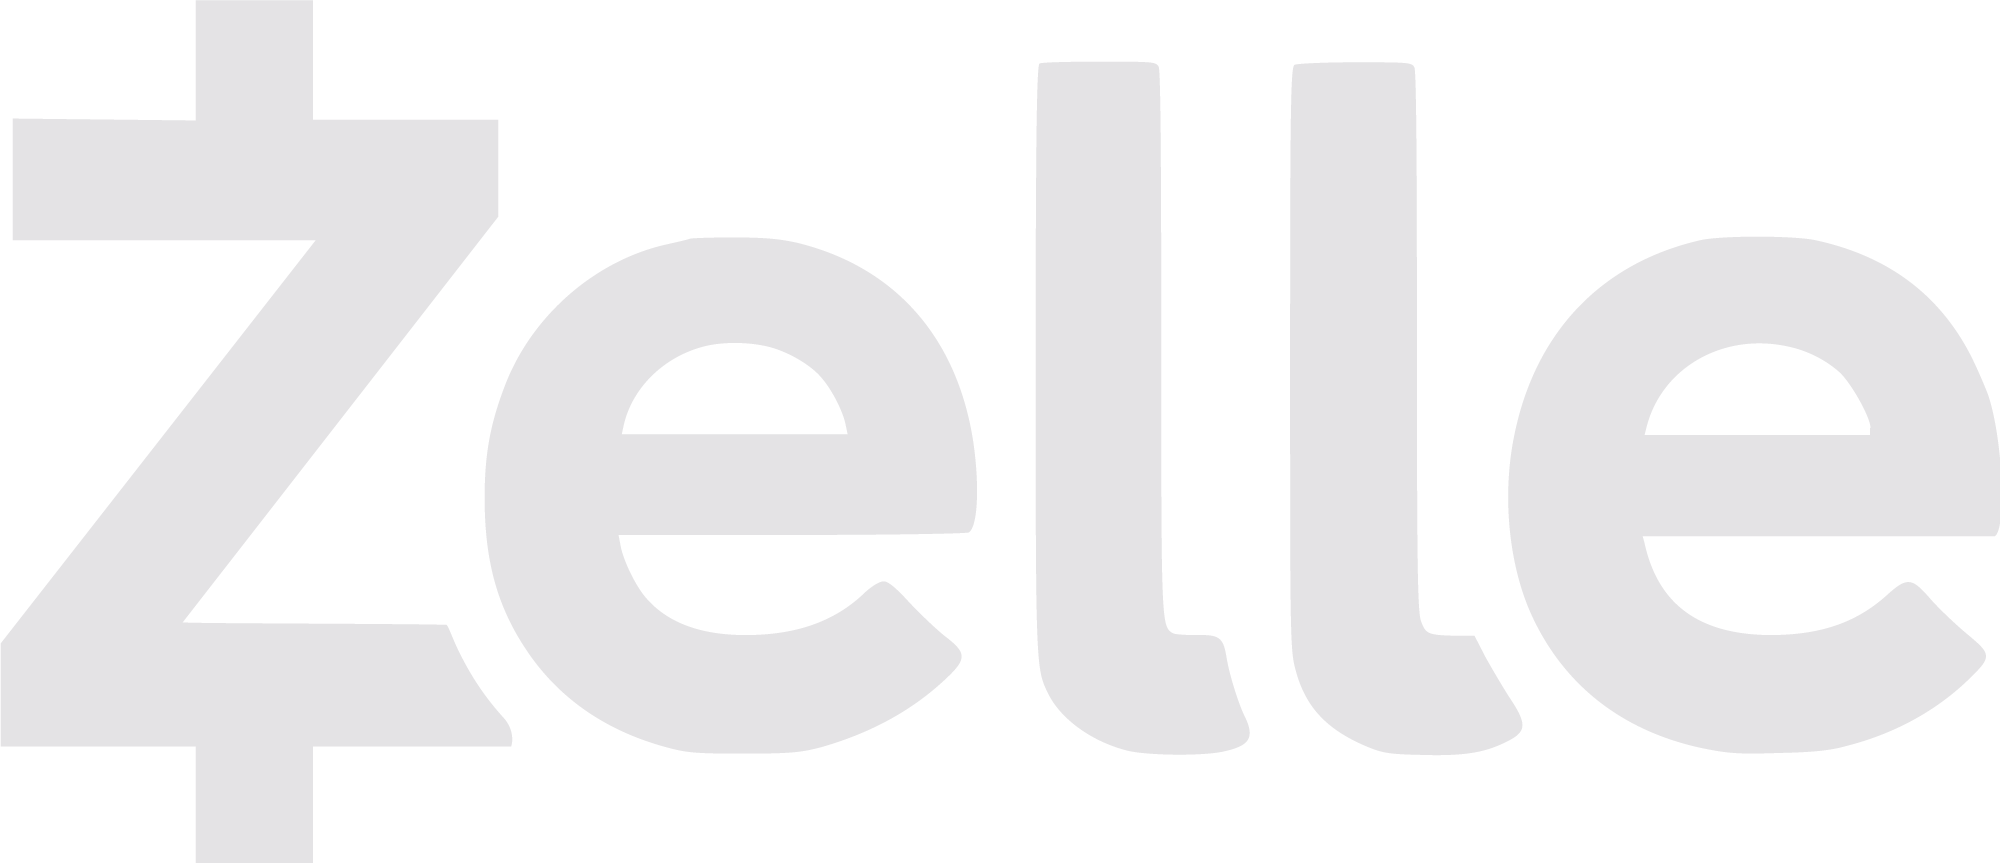 zelle logo transparent